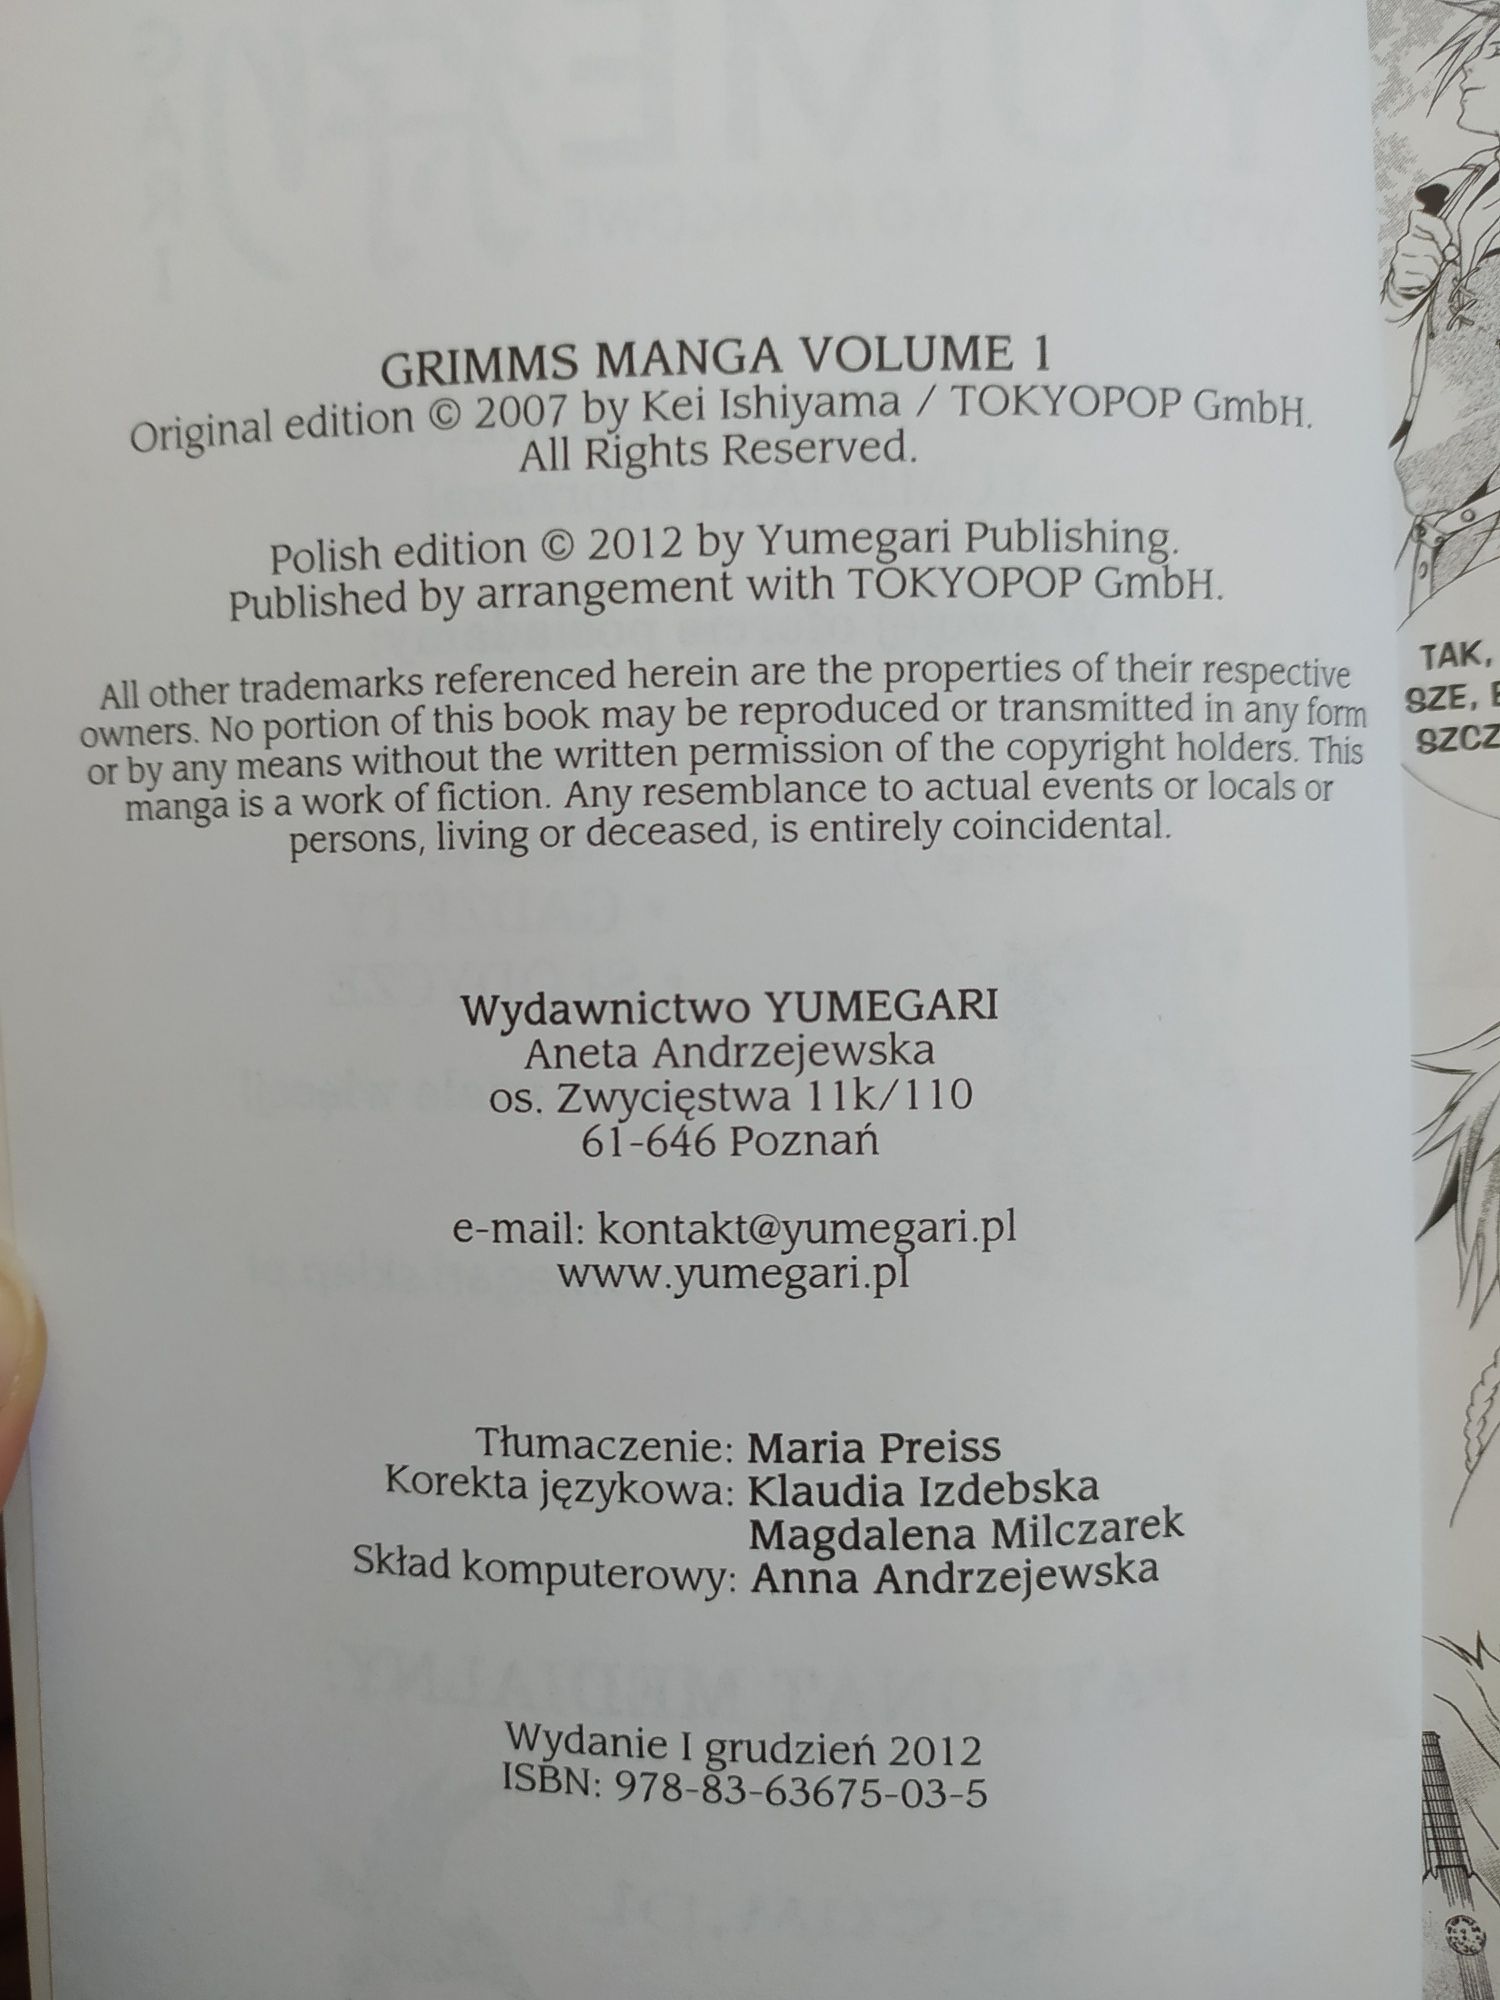 Grimms Manga tom 1, unikat